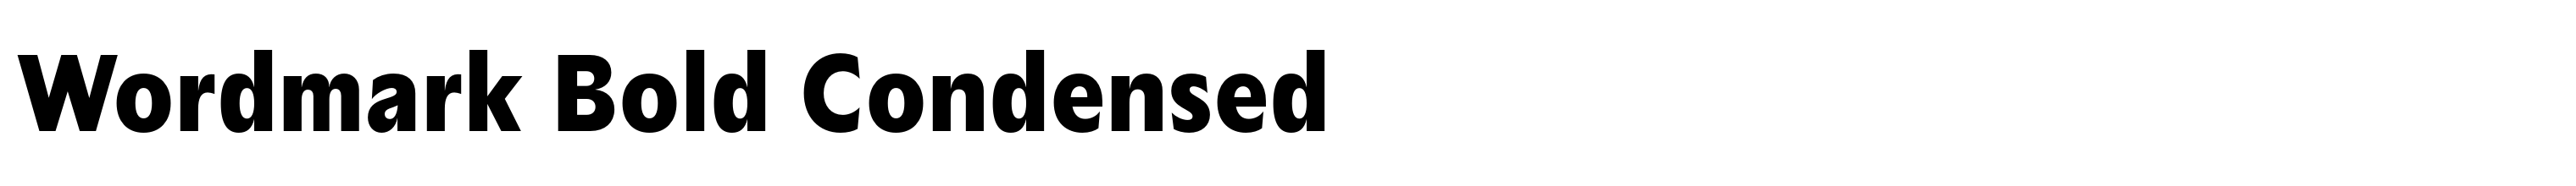 Wordmark Bold Condensed